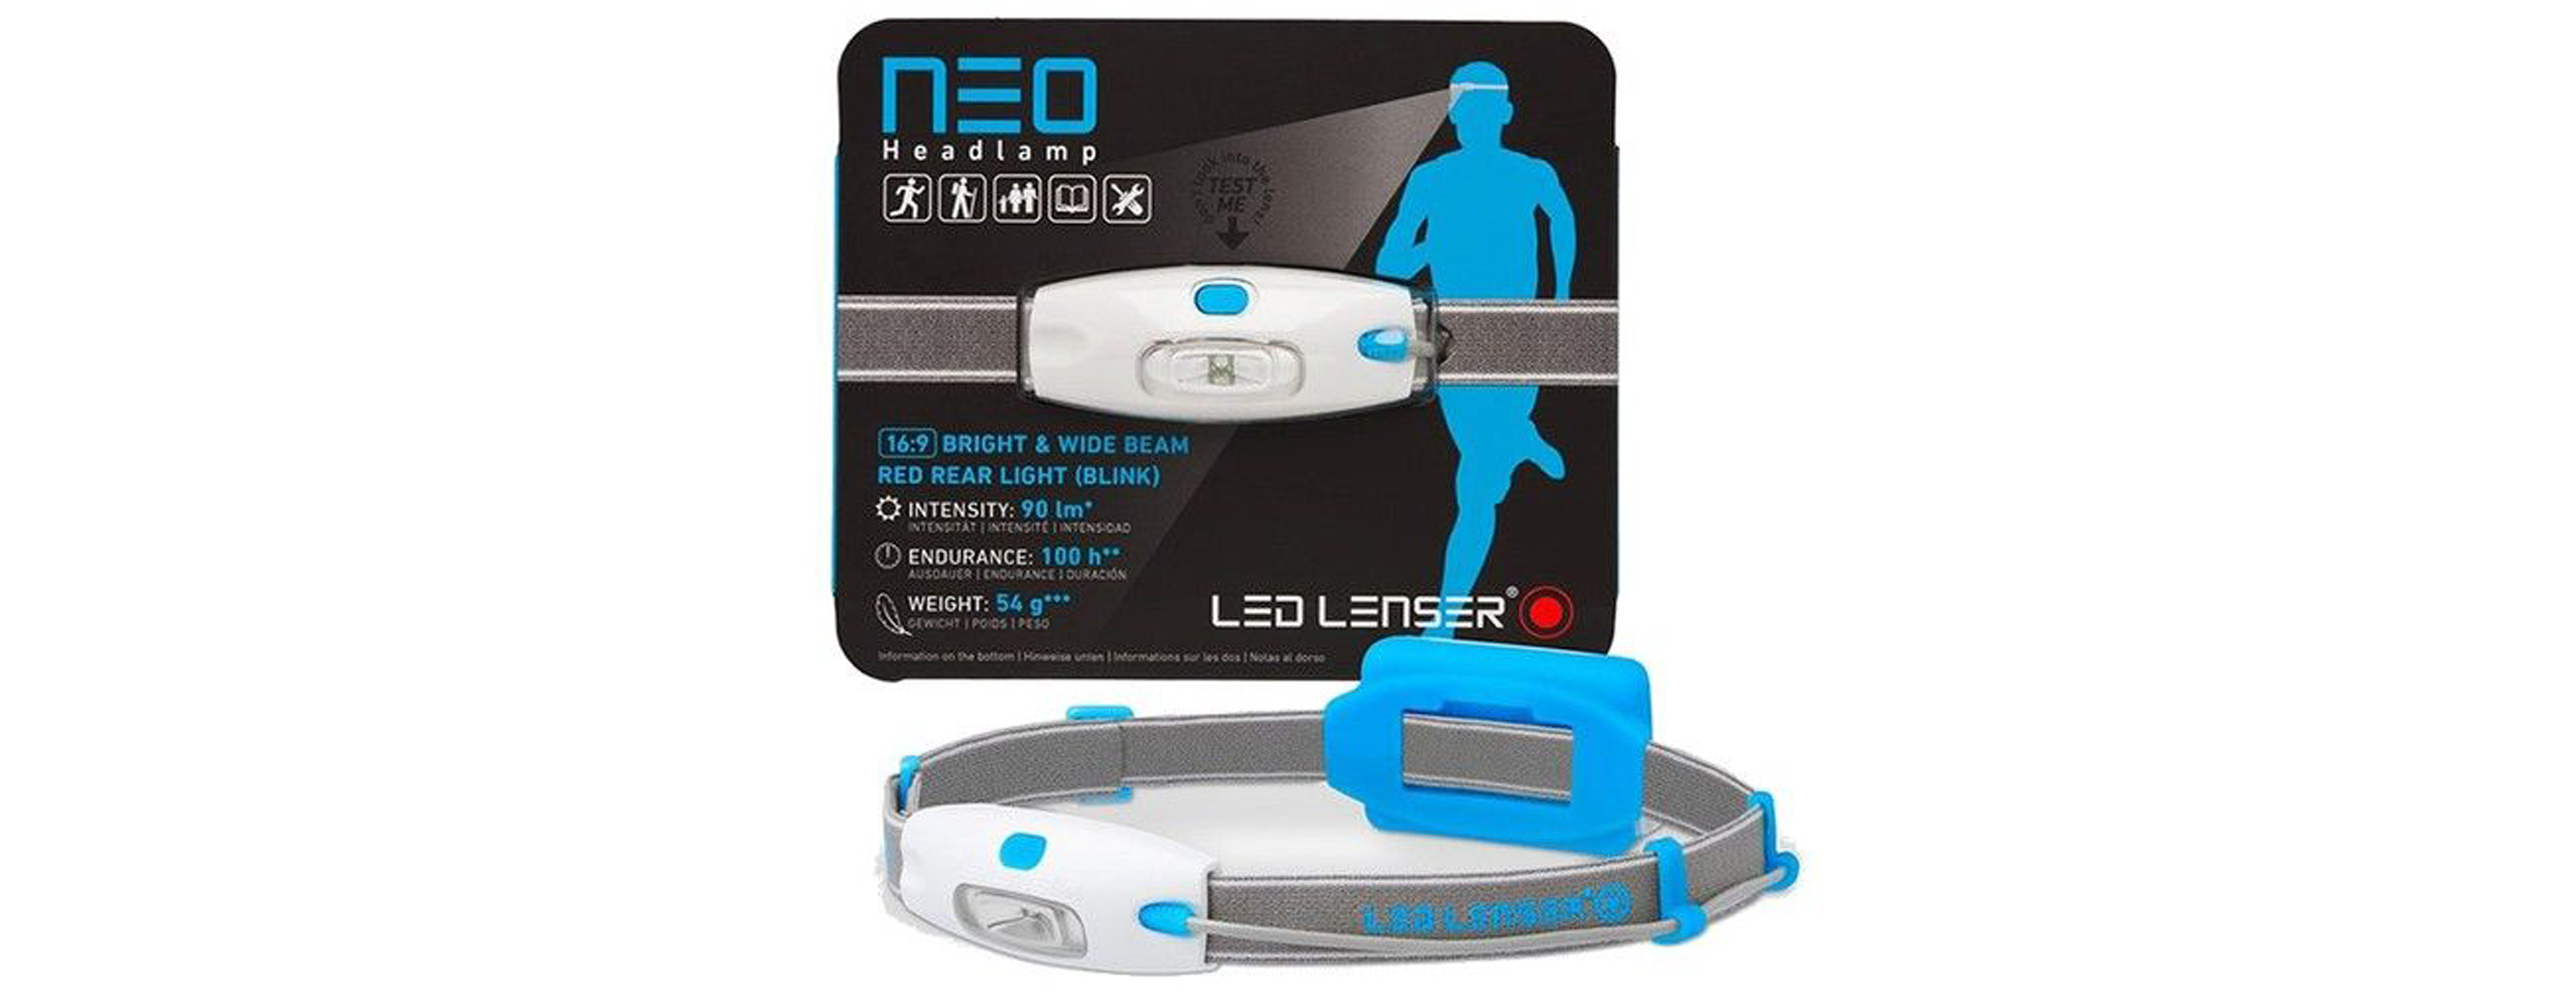 LED Lenser Neo Headlamp review – The color Blue – SAB – صاب